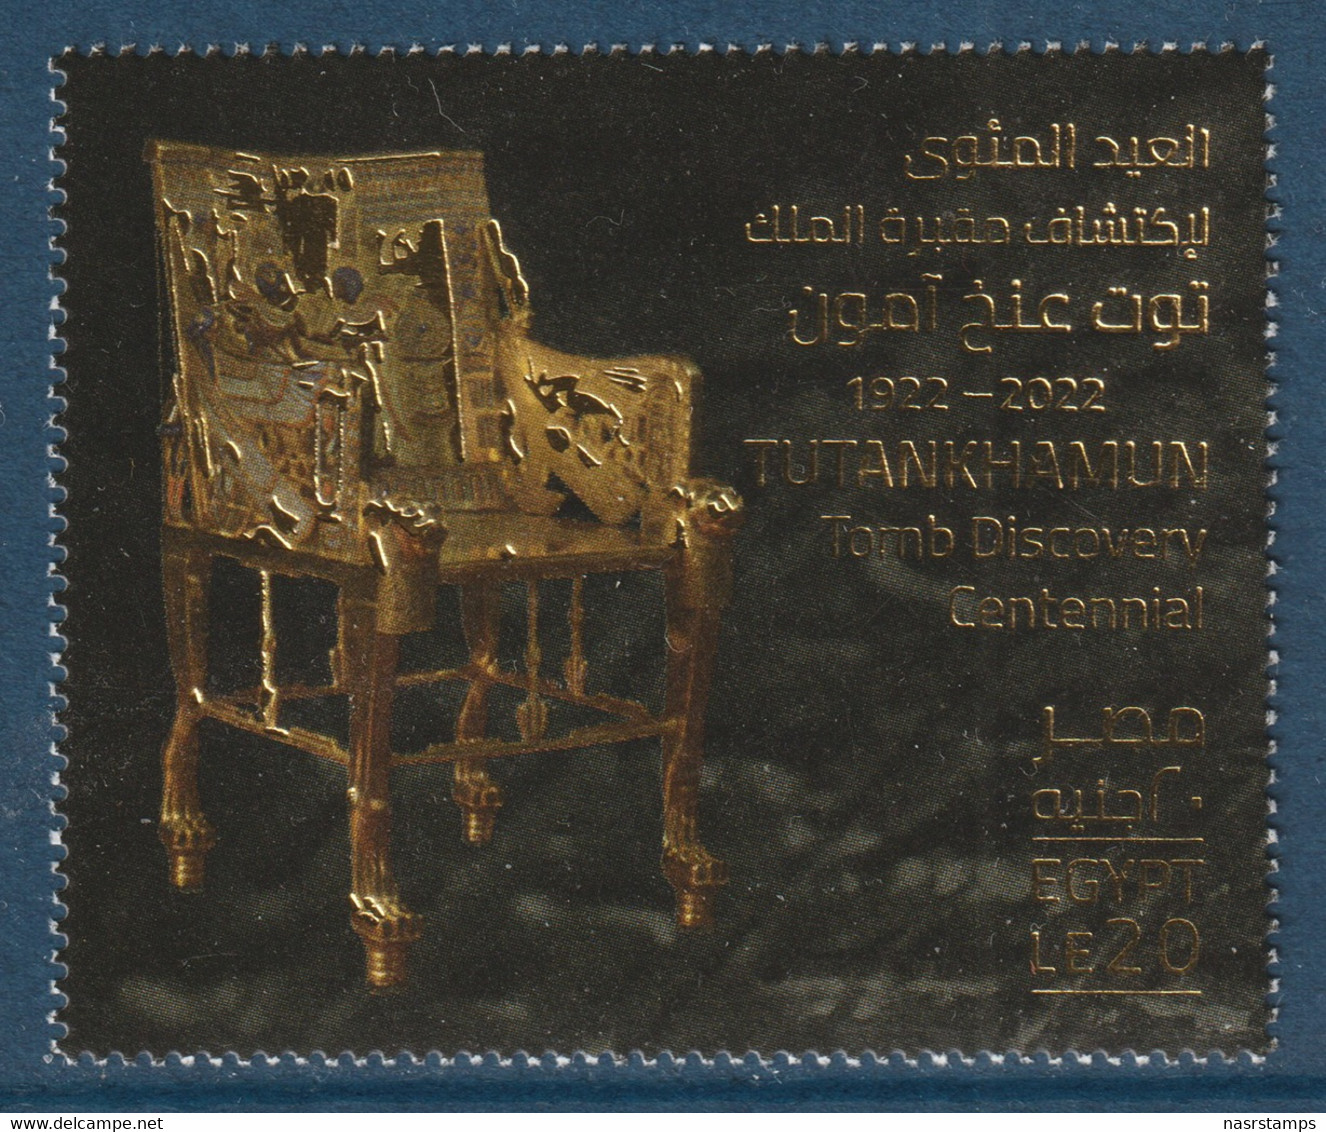 Egypt - 2022 - TUTANKHAMUN Tomb Discovery Centennial - Golden - MNH** - Aegyptologie